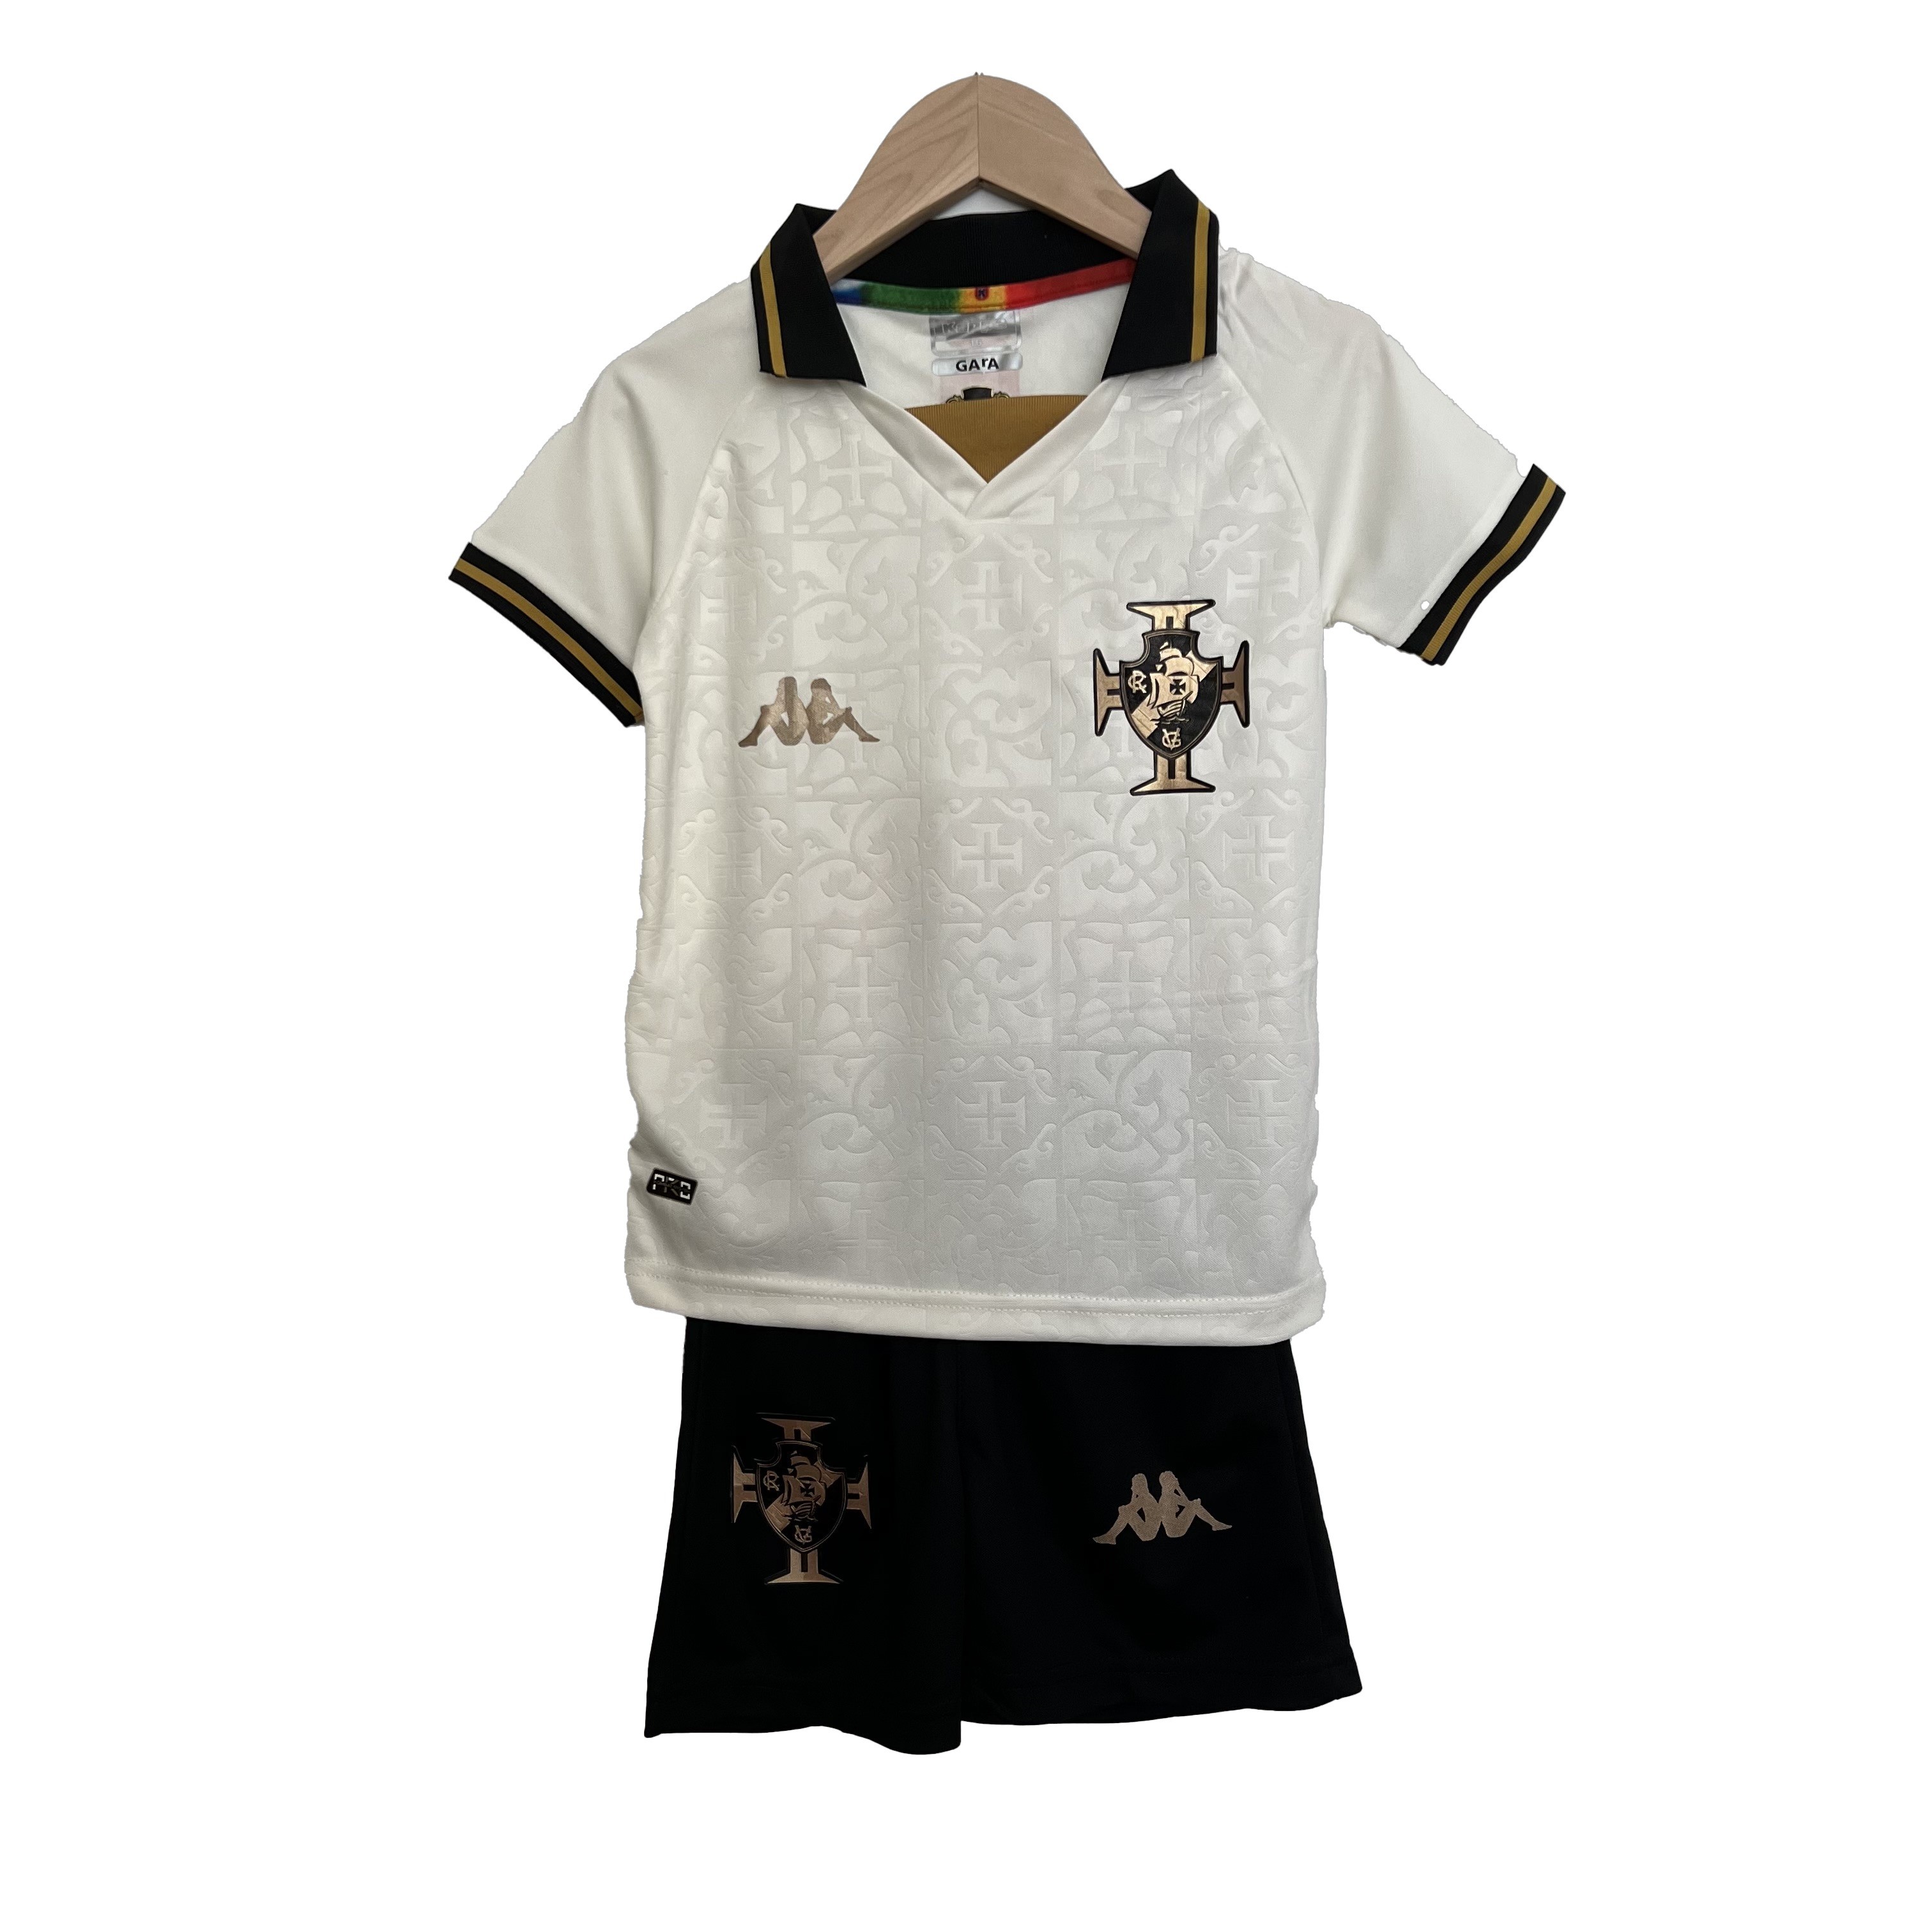 Camisa e Shorts Vasco III 22/23 - Torcedor Adidas Infantil - Bege/Dourado